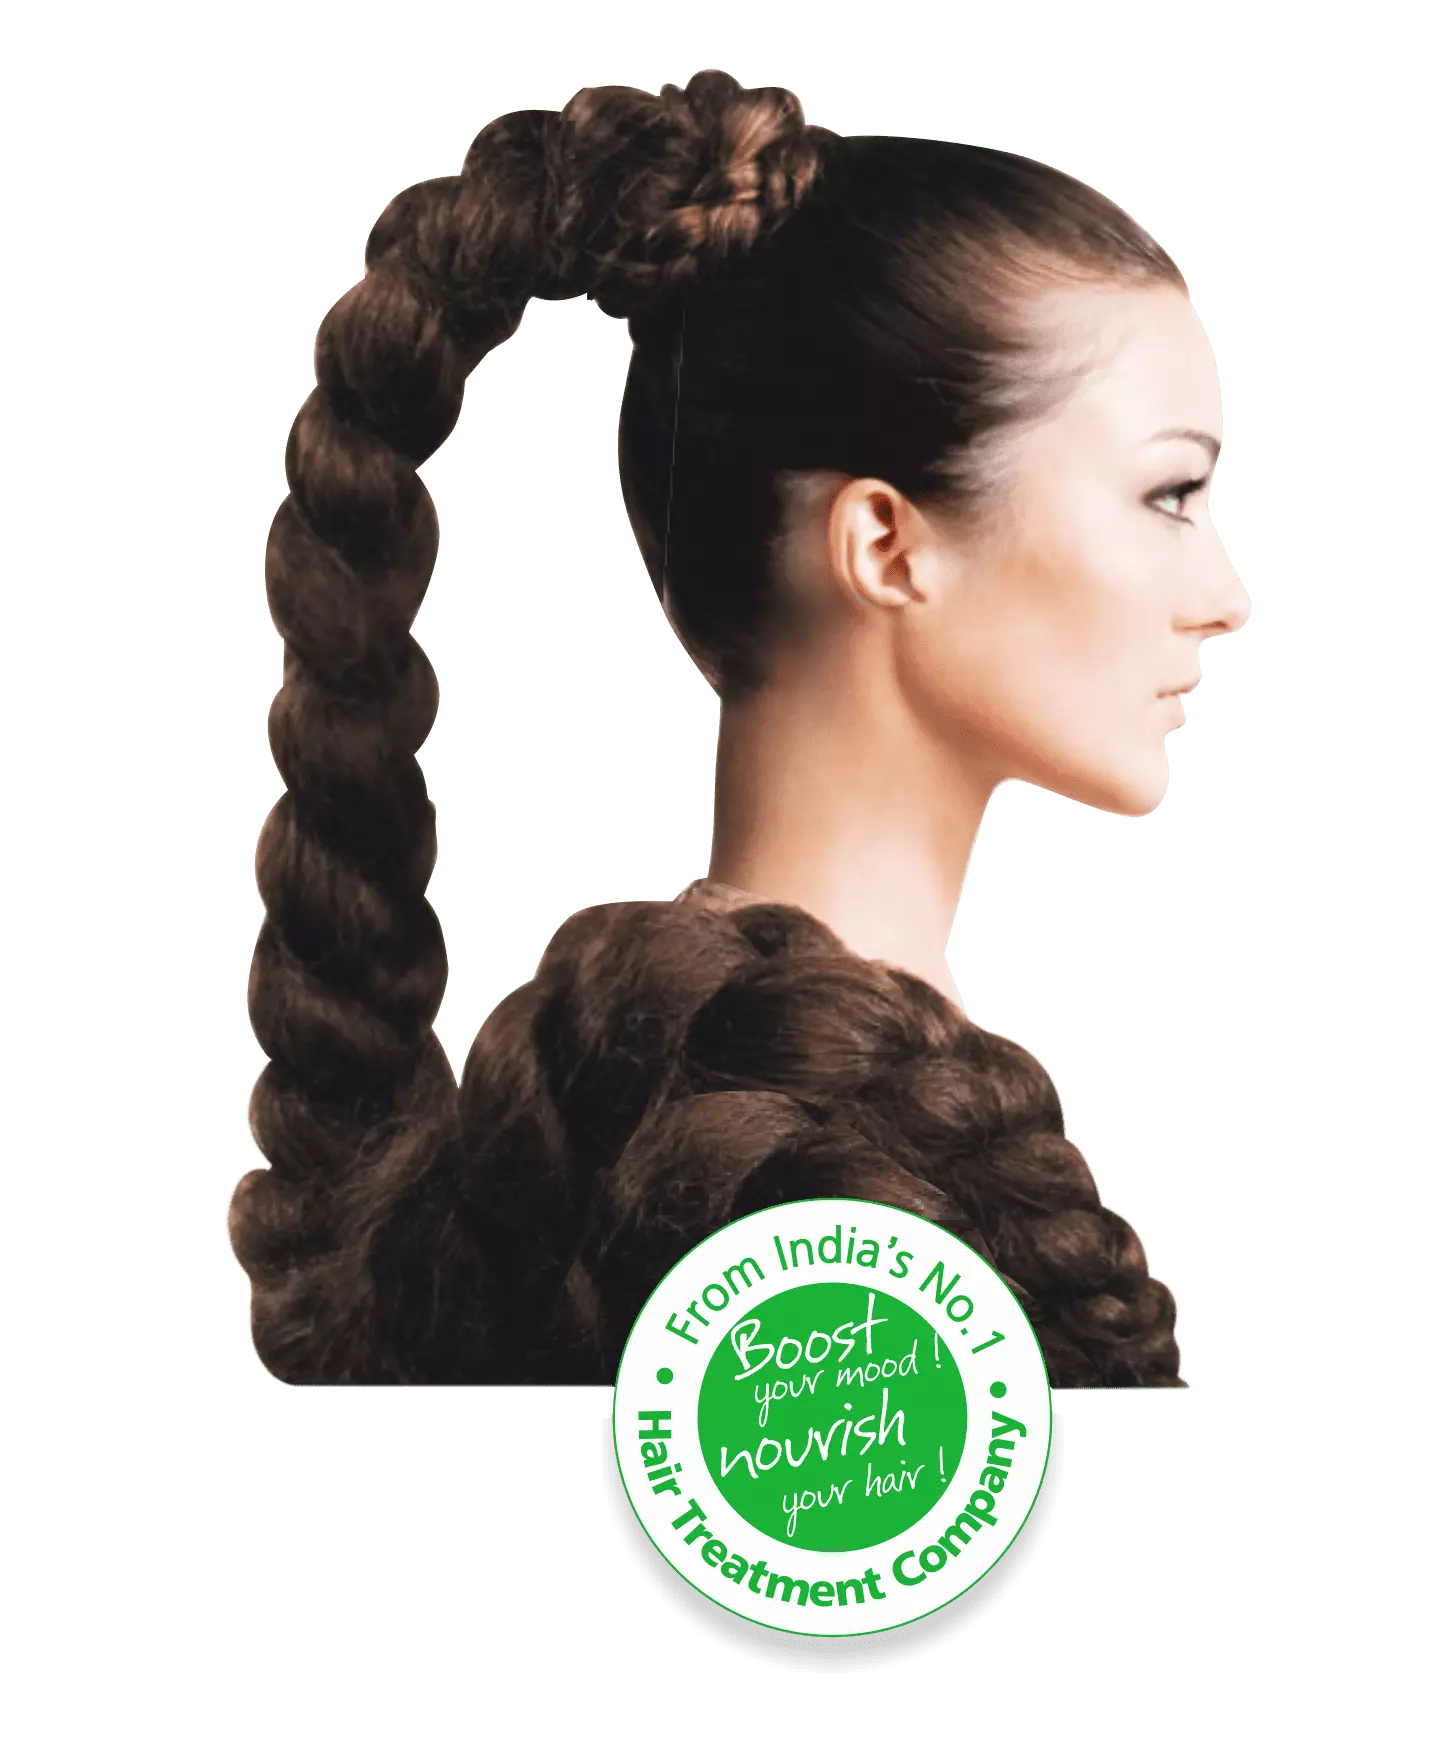 International Rootz Hair Oil | Hair Growth Oil